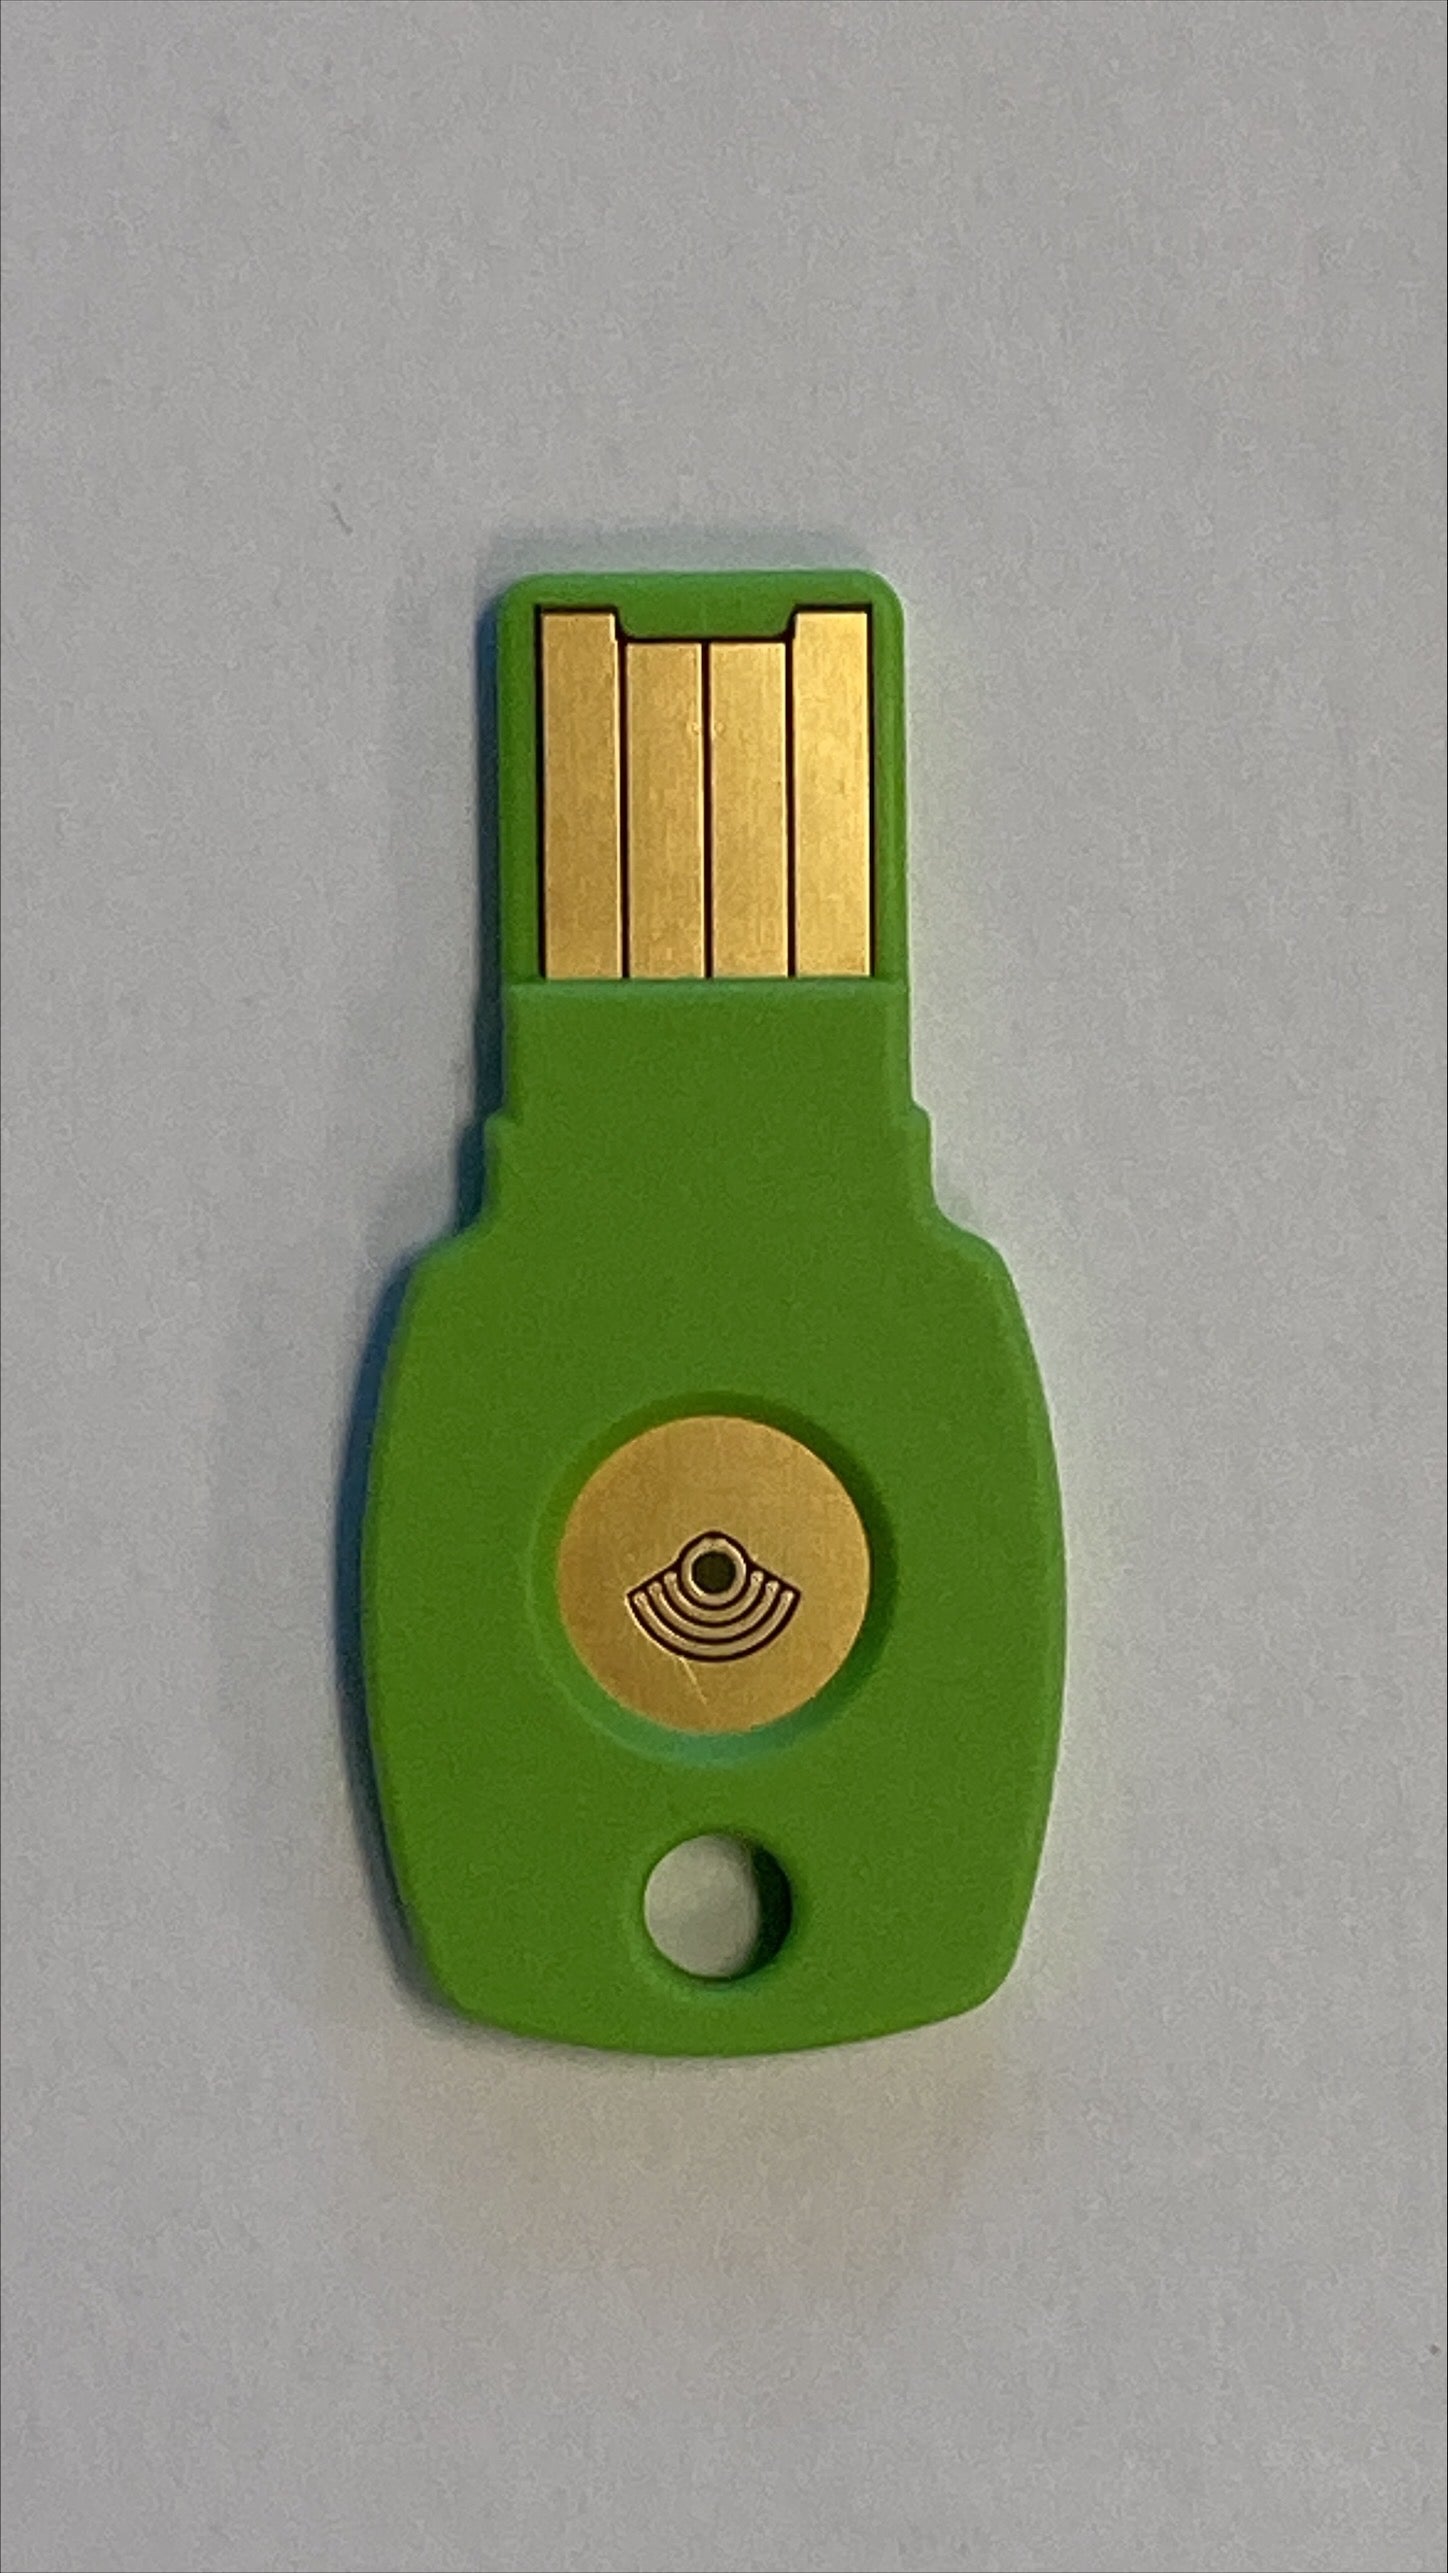 liv grænse Tage af FEITIAN ePass GREEN LIMITED EDITION FIDO2 FIDO U2F USB-A + NFC Security Key  | K9 – FEITIAN Technologies US